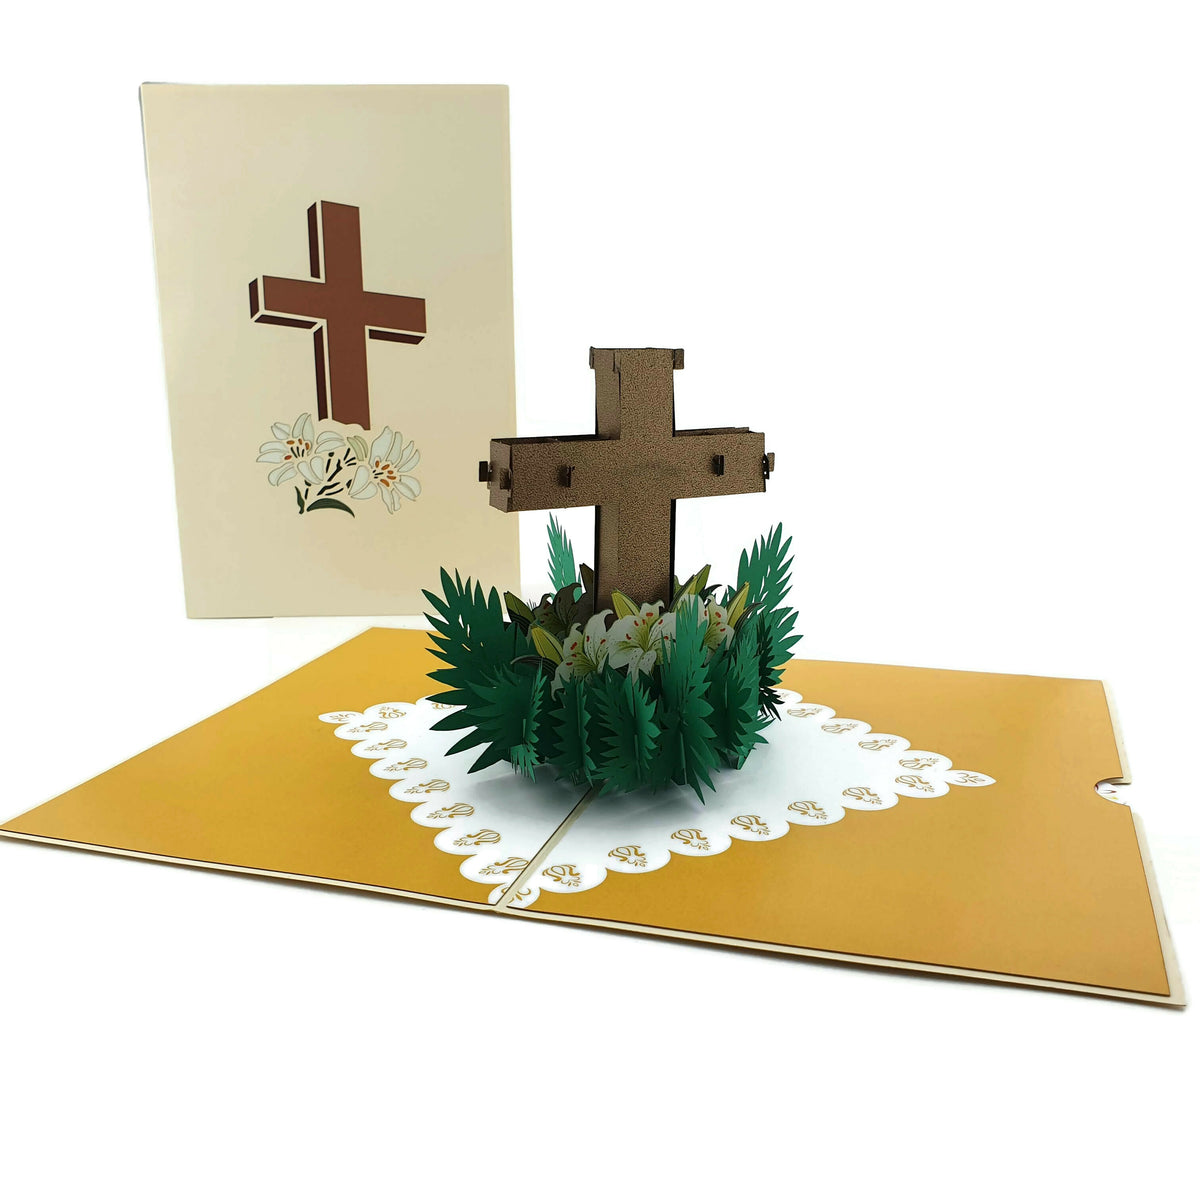 Easter Cross Pop Up Card